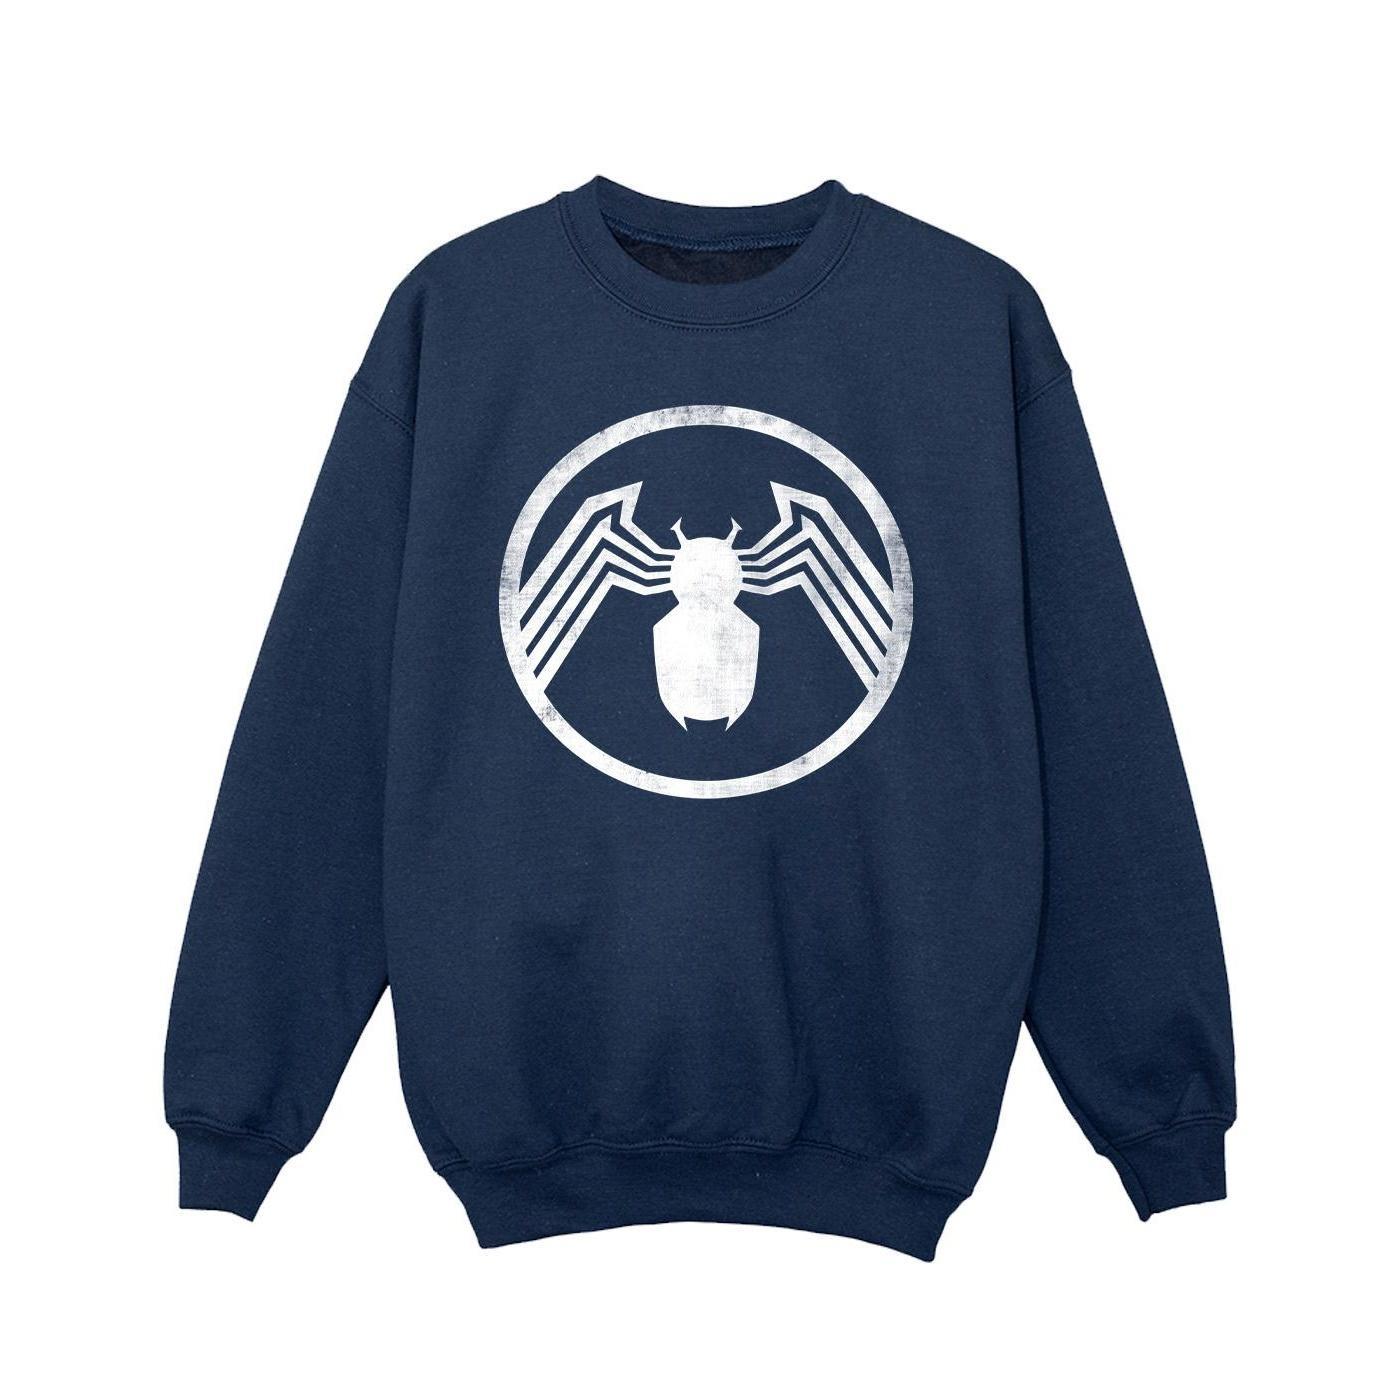 Marvel Girls Venom Logo Emblem Sweatshirt (Navy Blue) (5-6 Years)